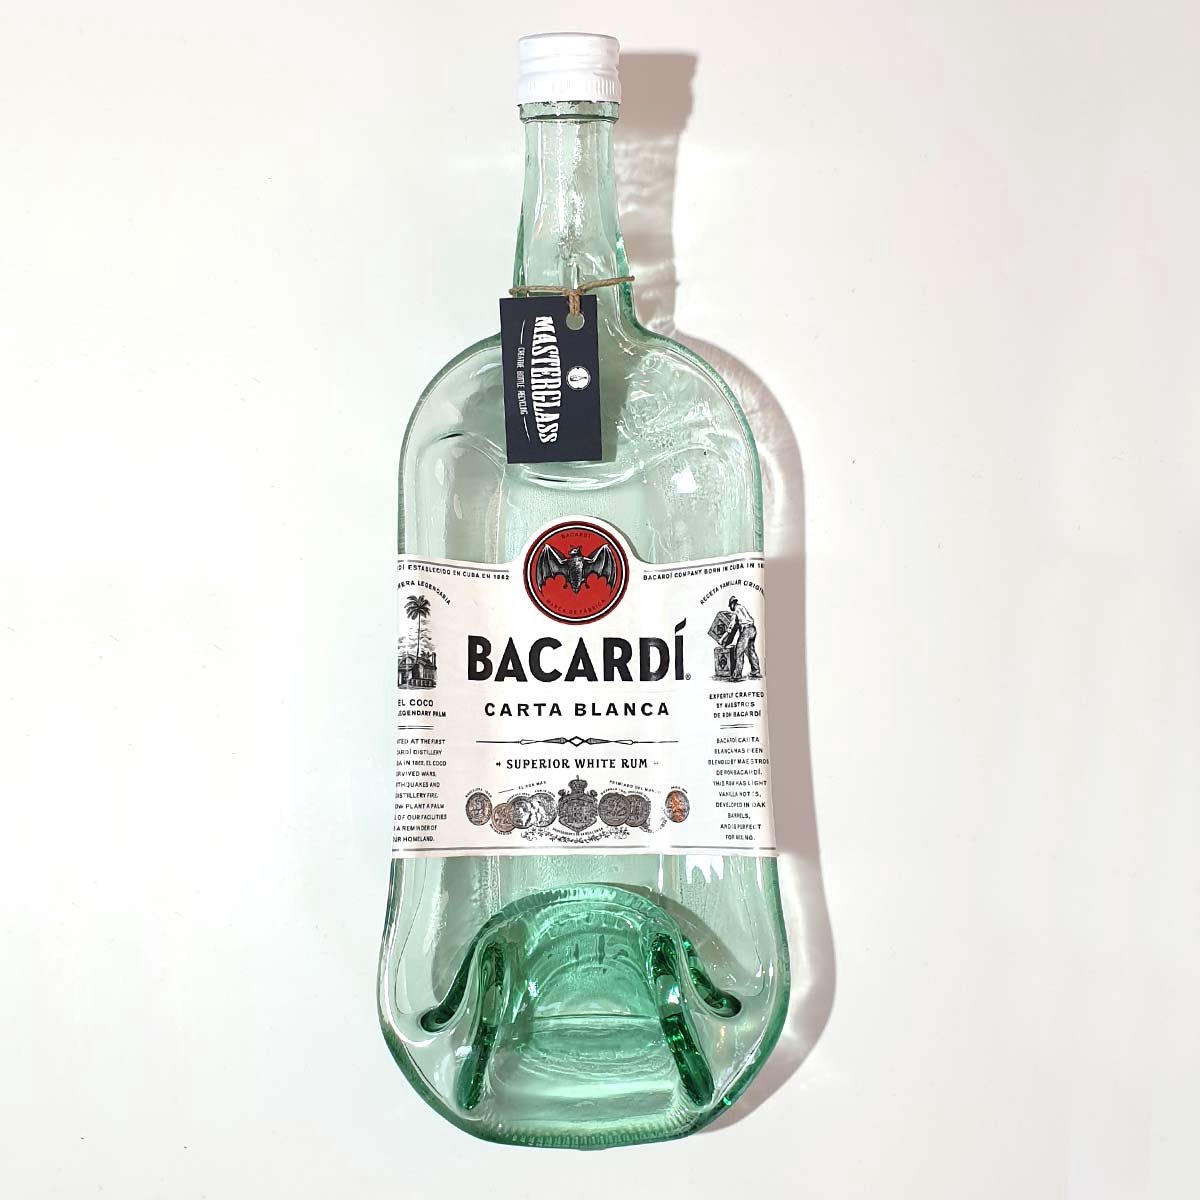 Borrelplank | kaasplank | tapas | Bacardi | gesmolten fles | recycling | upcycling